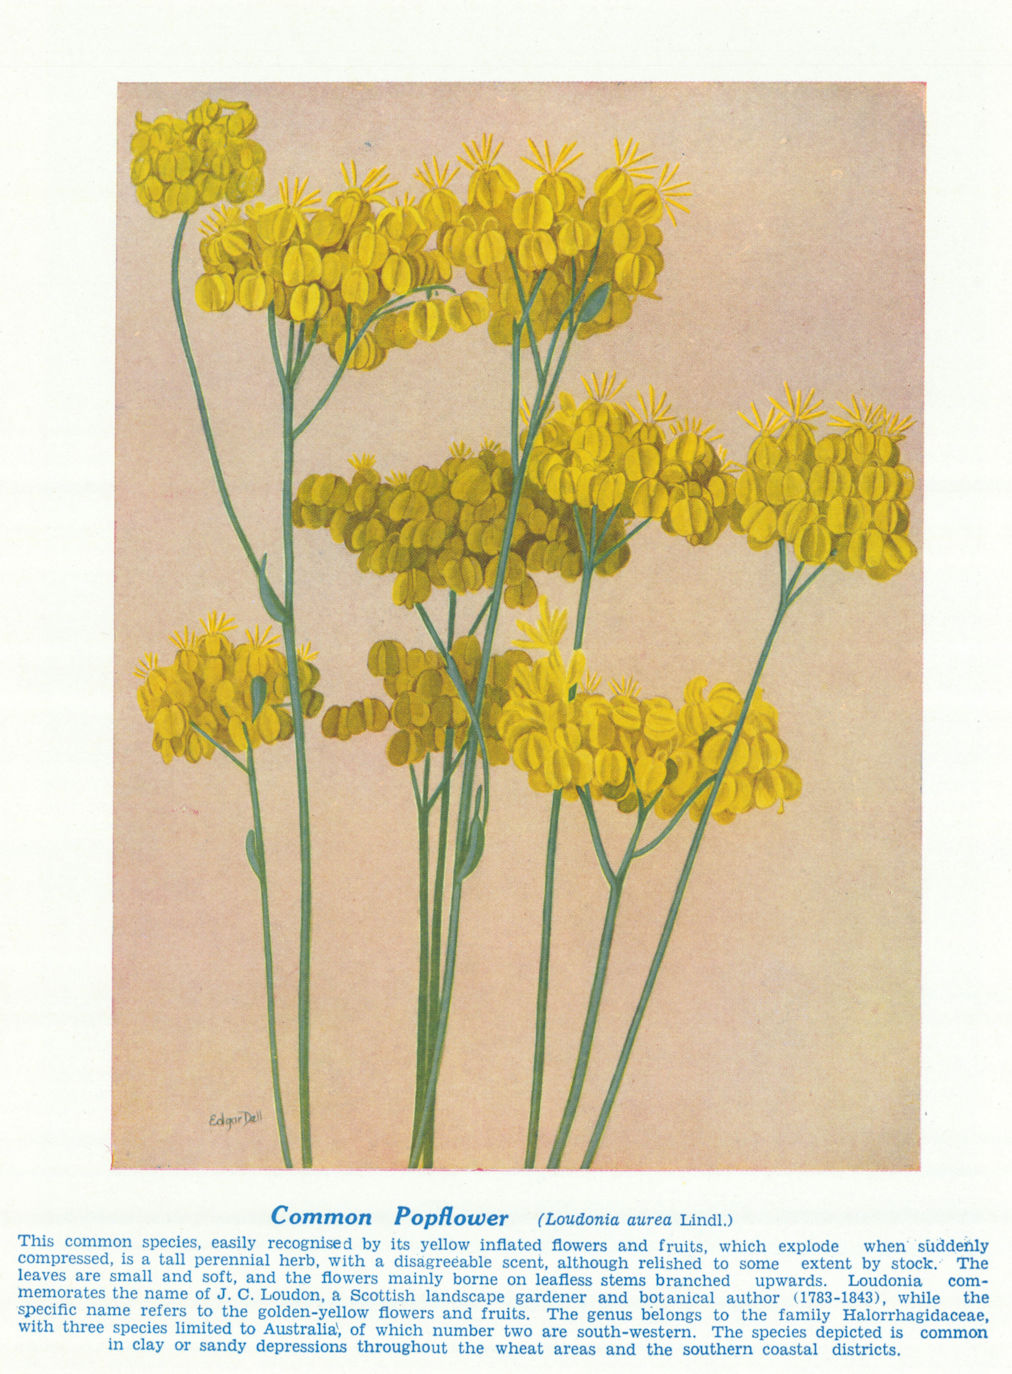 Common Popflower (Loudonia aurea). West Australian Wild Flowers 1950 old print